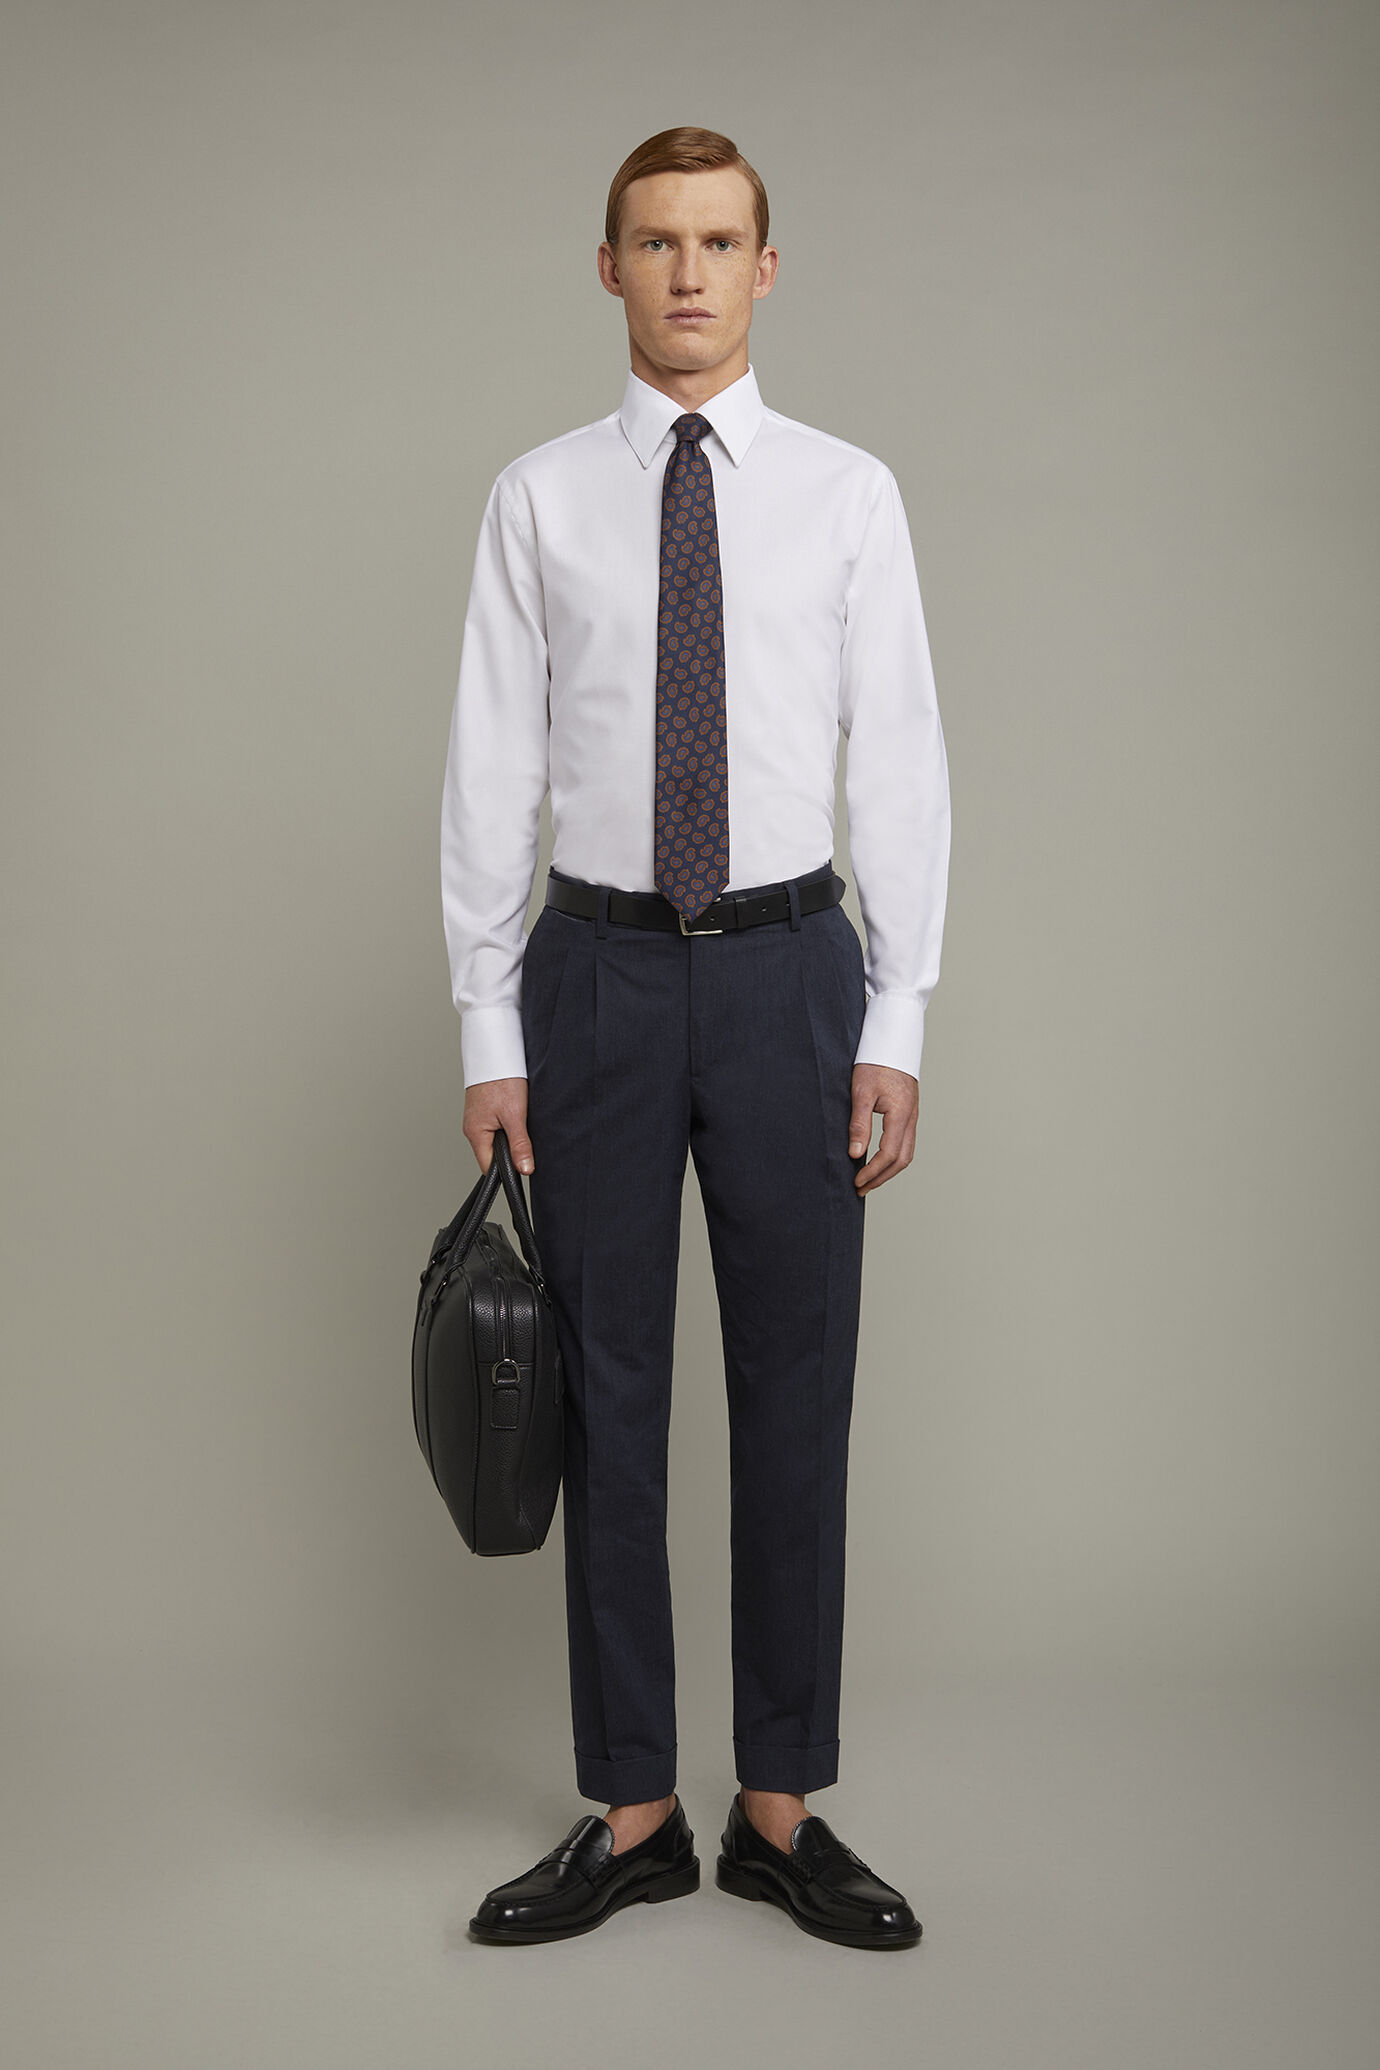 Men's shirt classic collar 100% cotton pinpoint fabric plain regualr fit image number 0